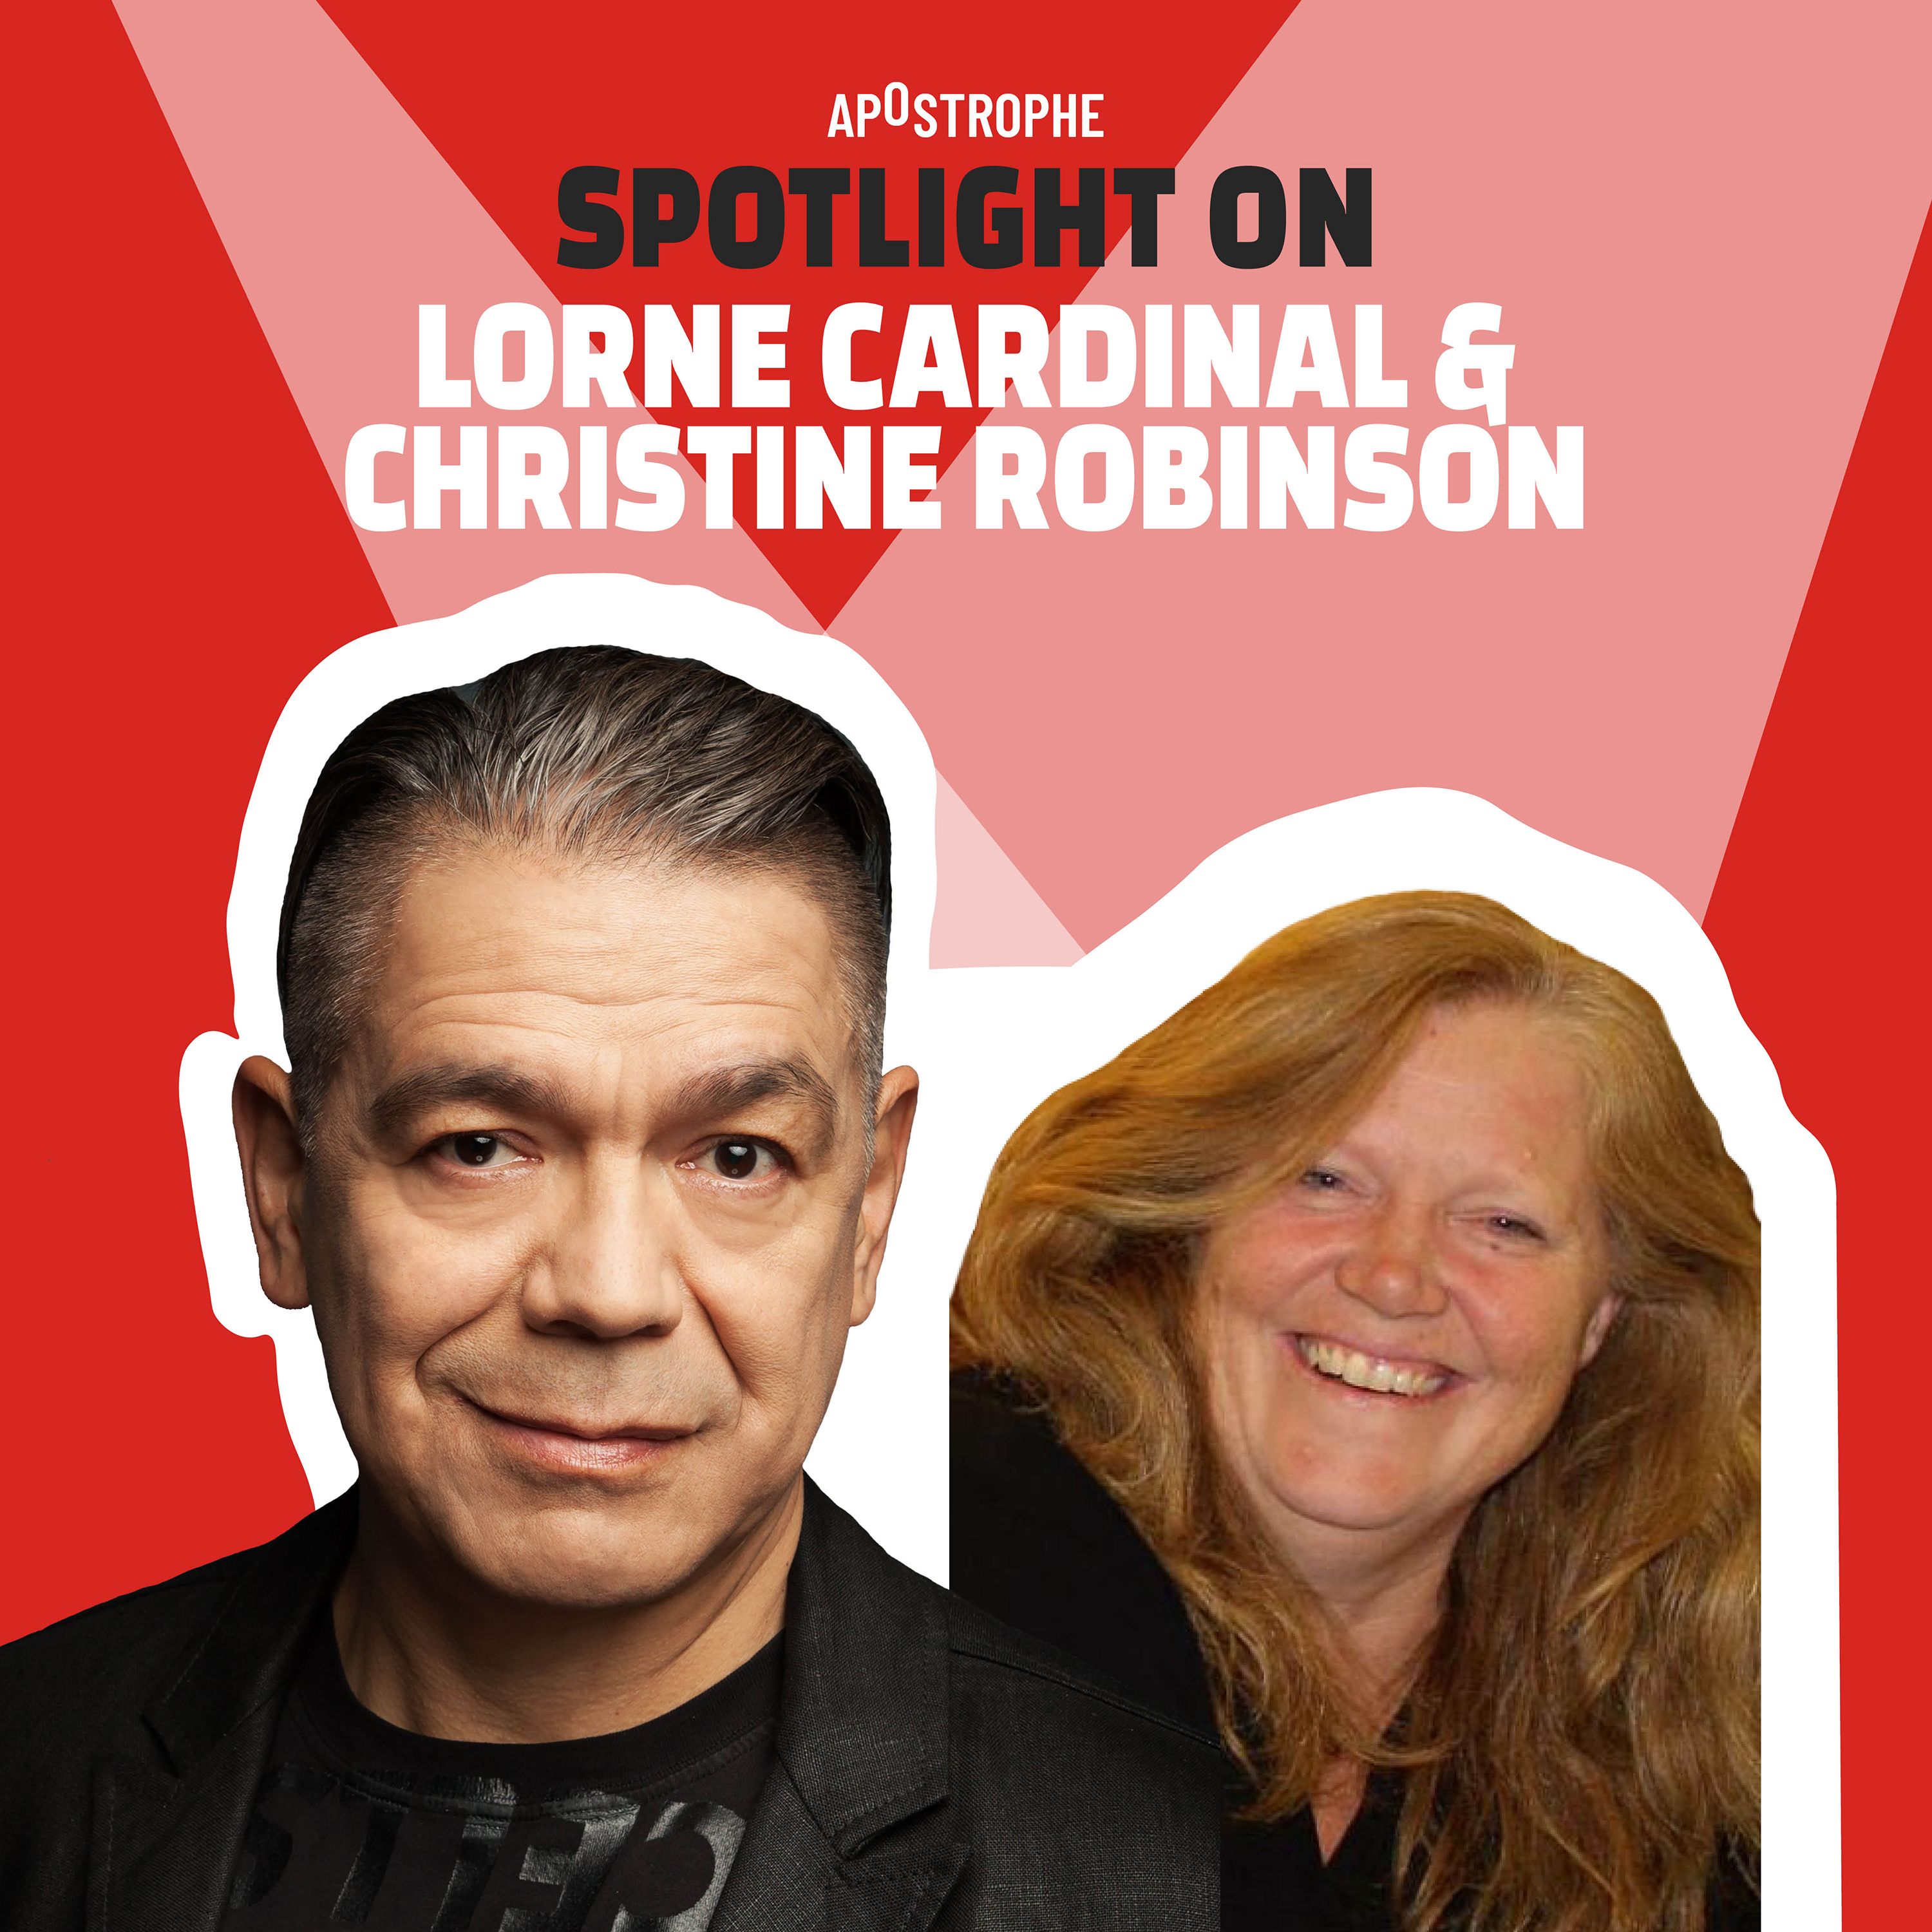 Lorne Cardinal & Christine Robinson